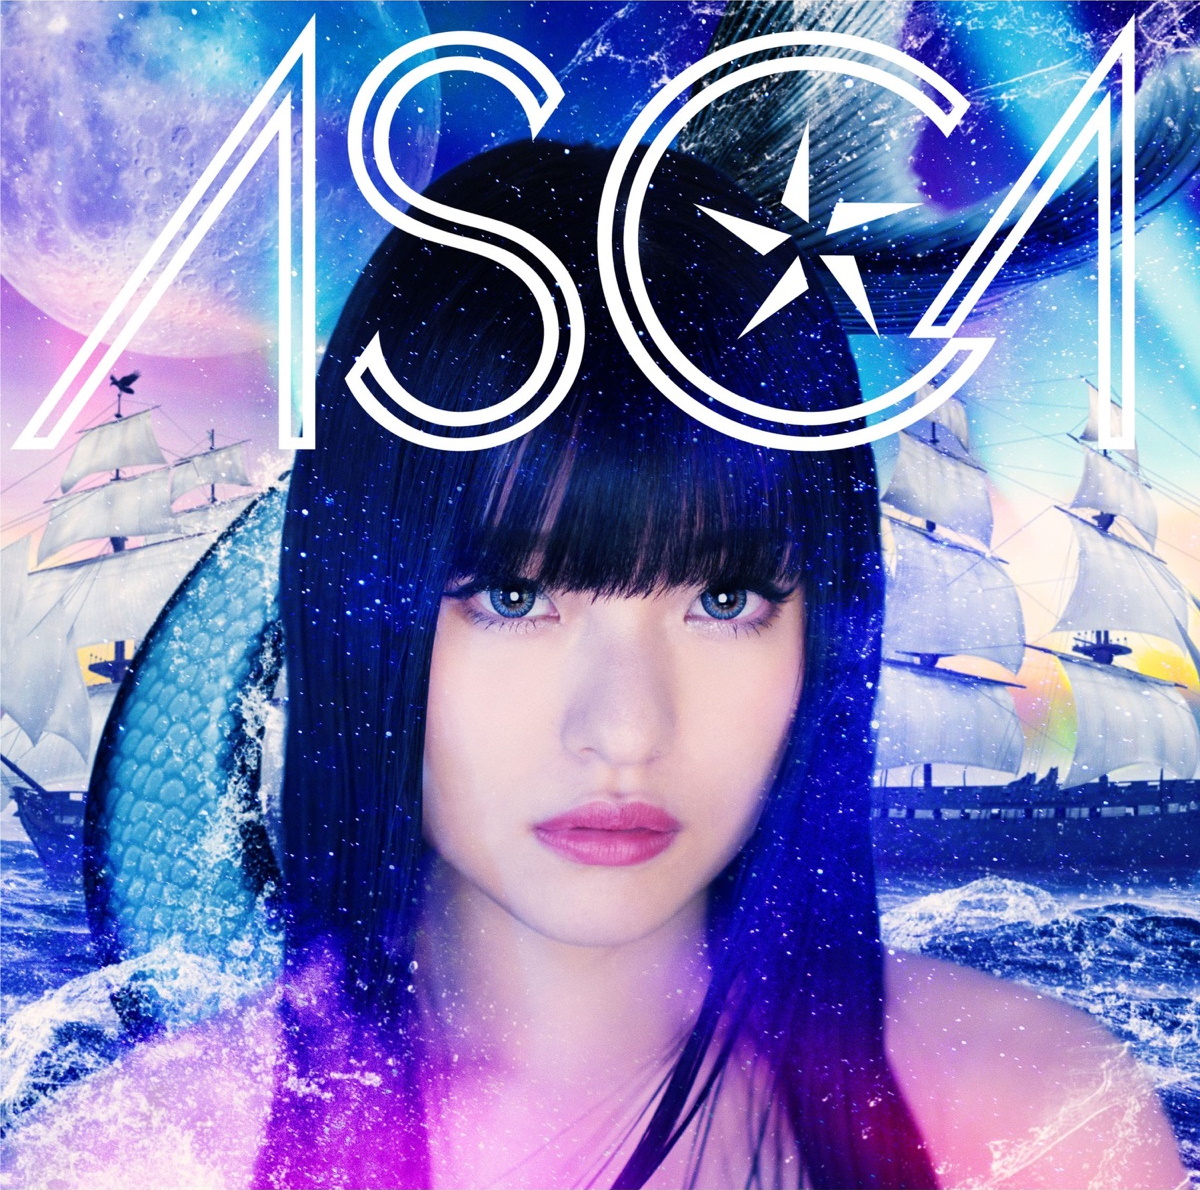 Cover art for『ASCA - Shinkaron』from the release『Hyakki Yakou』